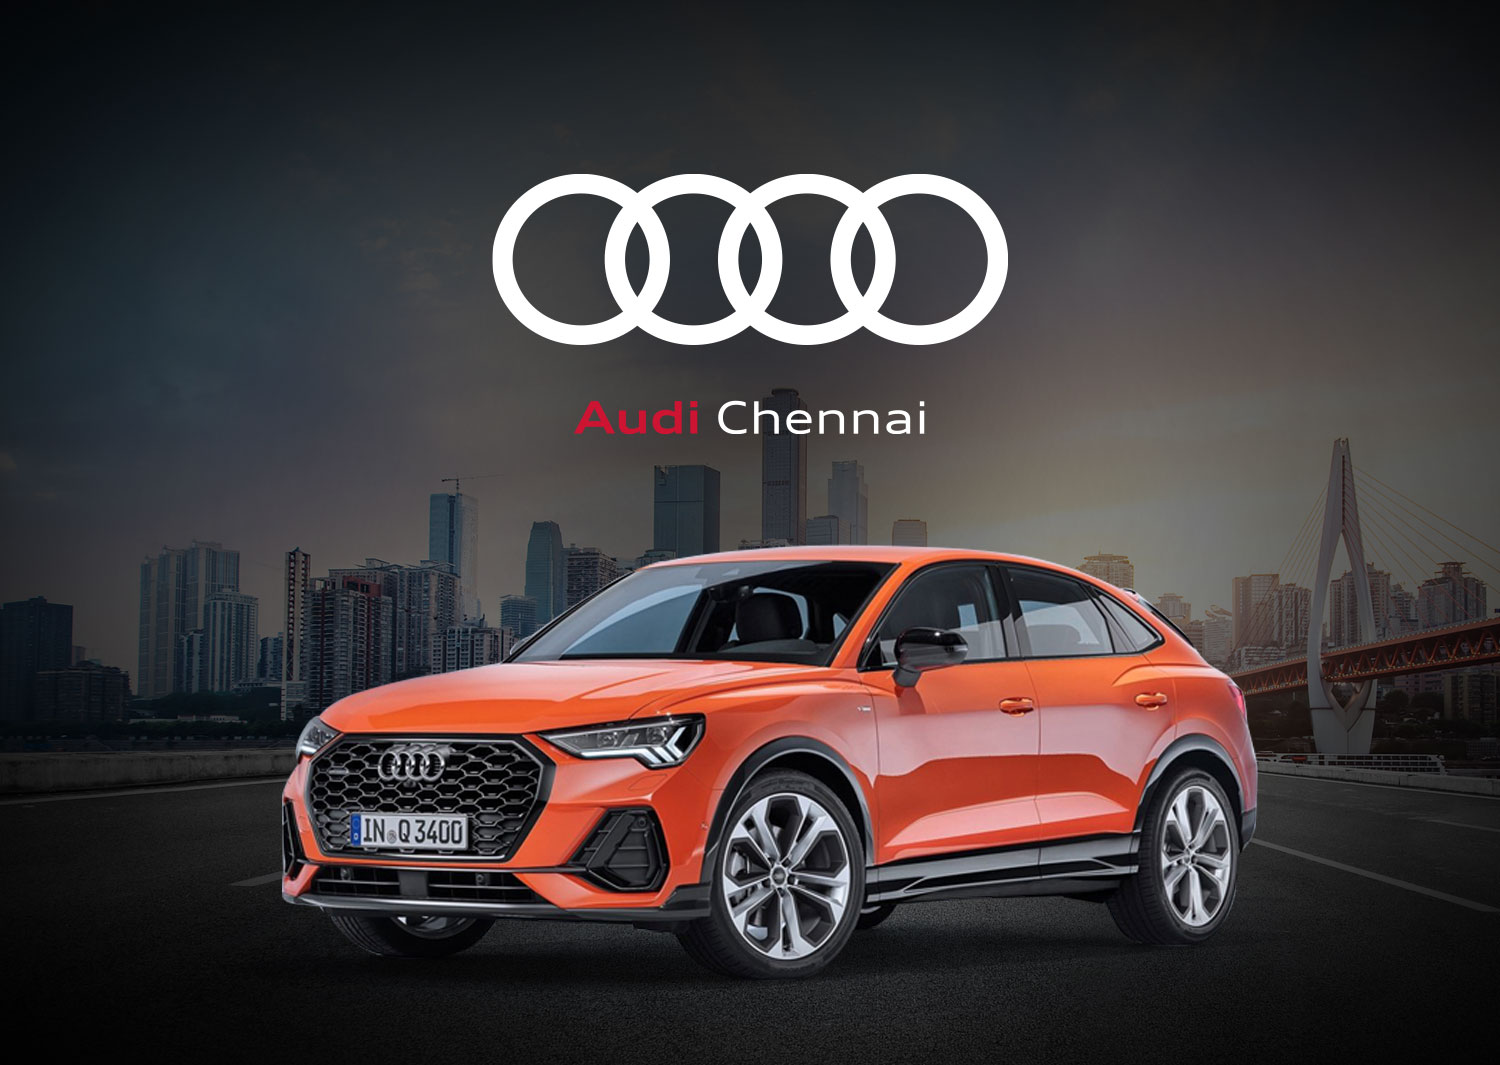 Audi Chennai - Luxury Car Showroom